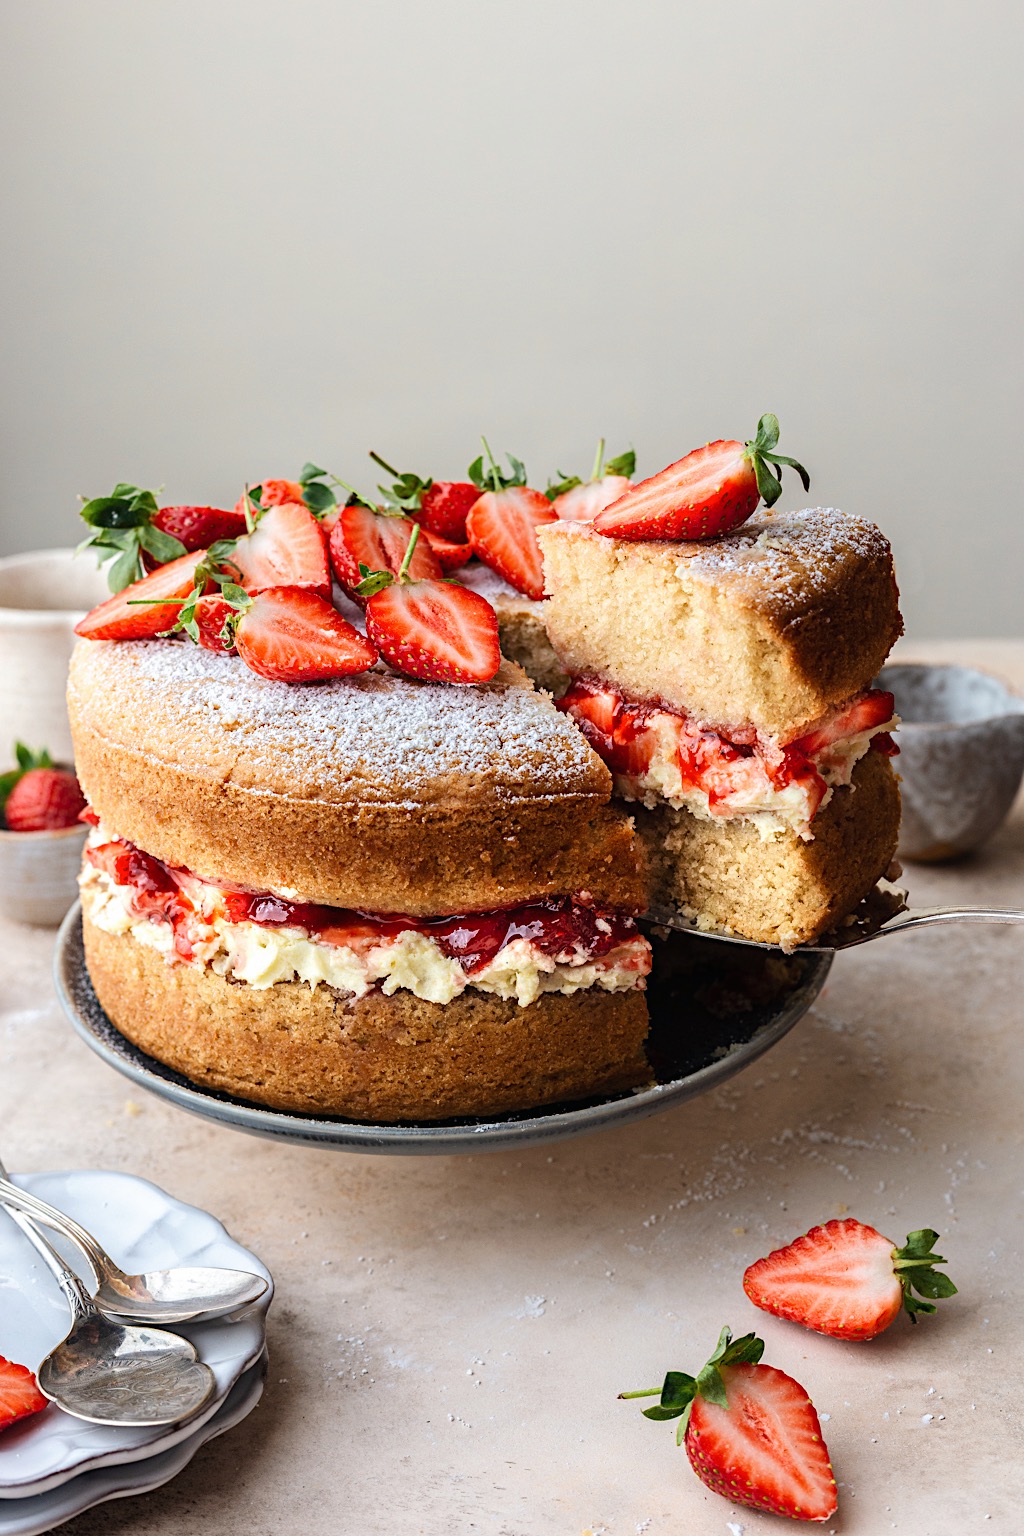 Eunice Power's strawberry and cream sponge cake